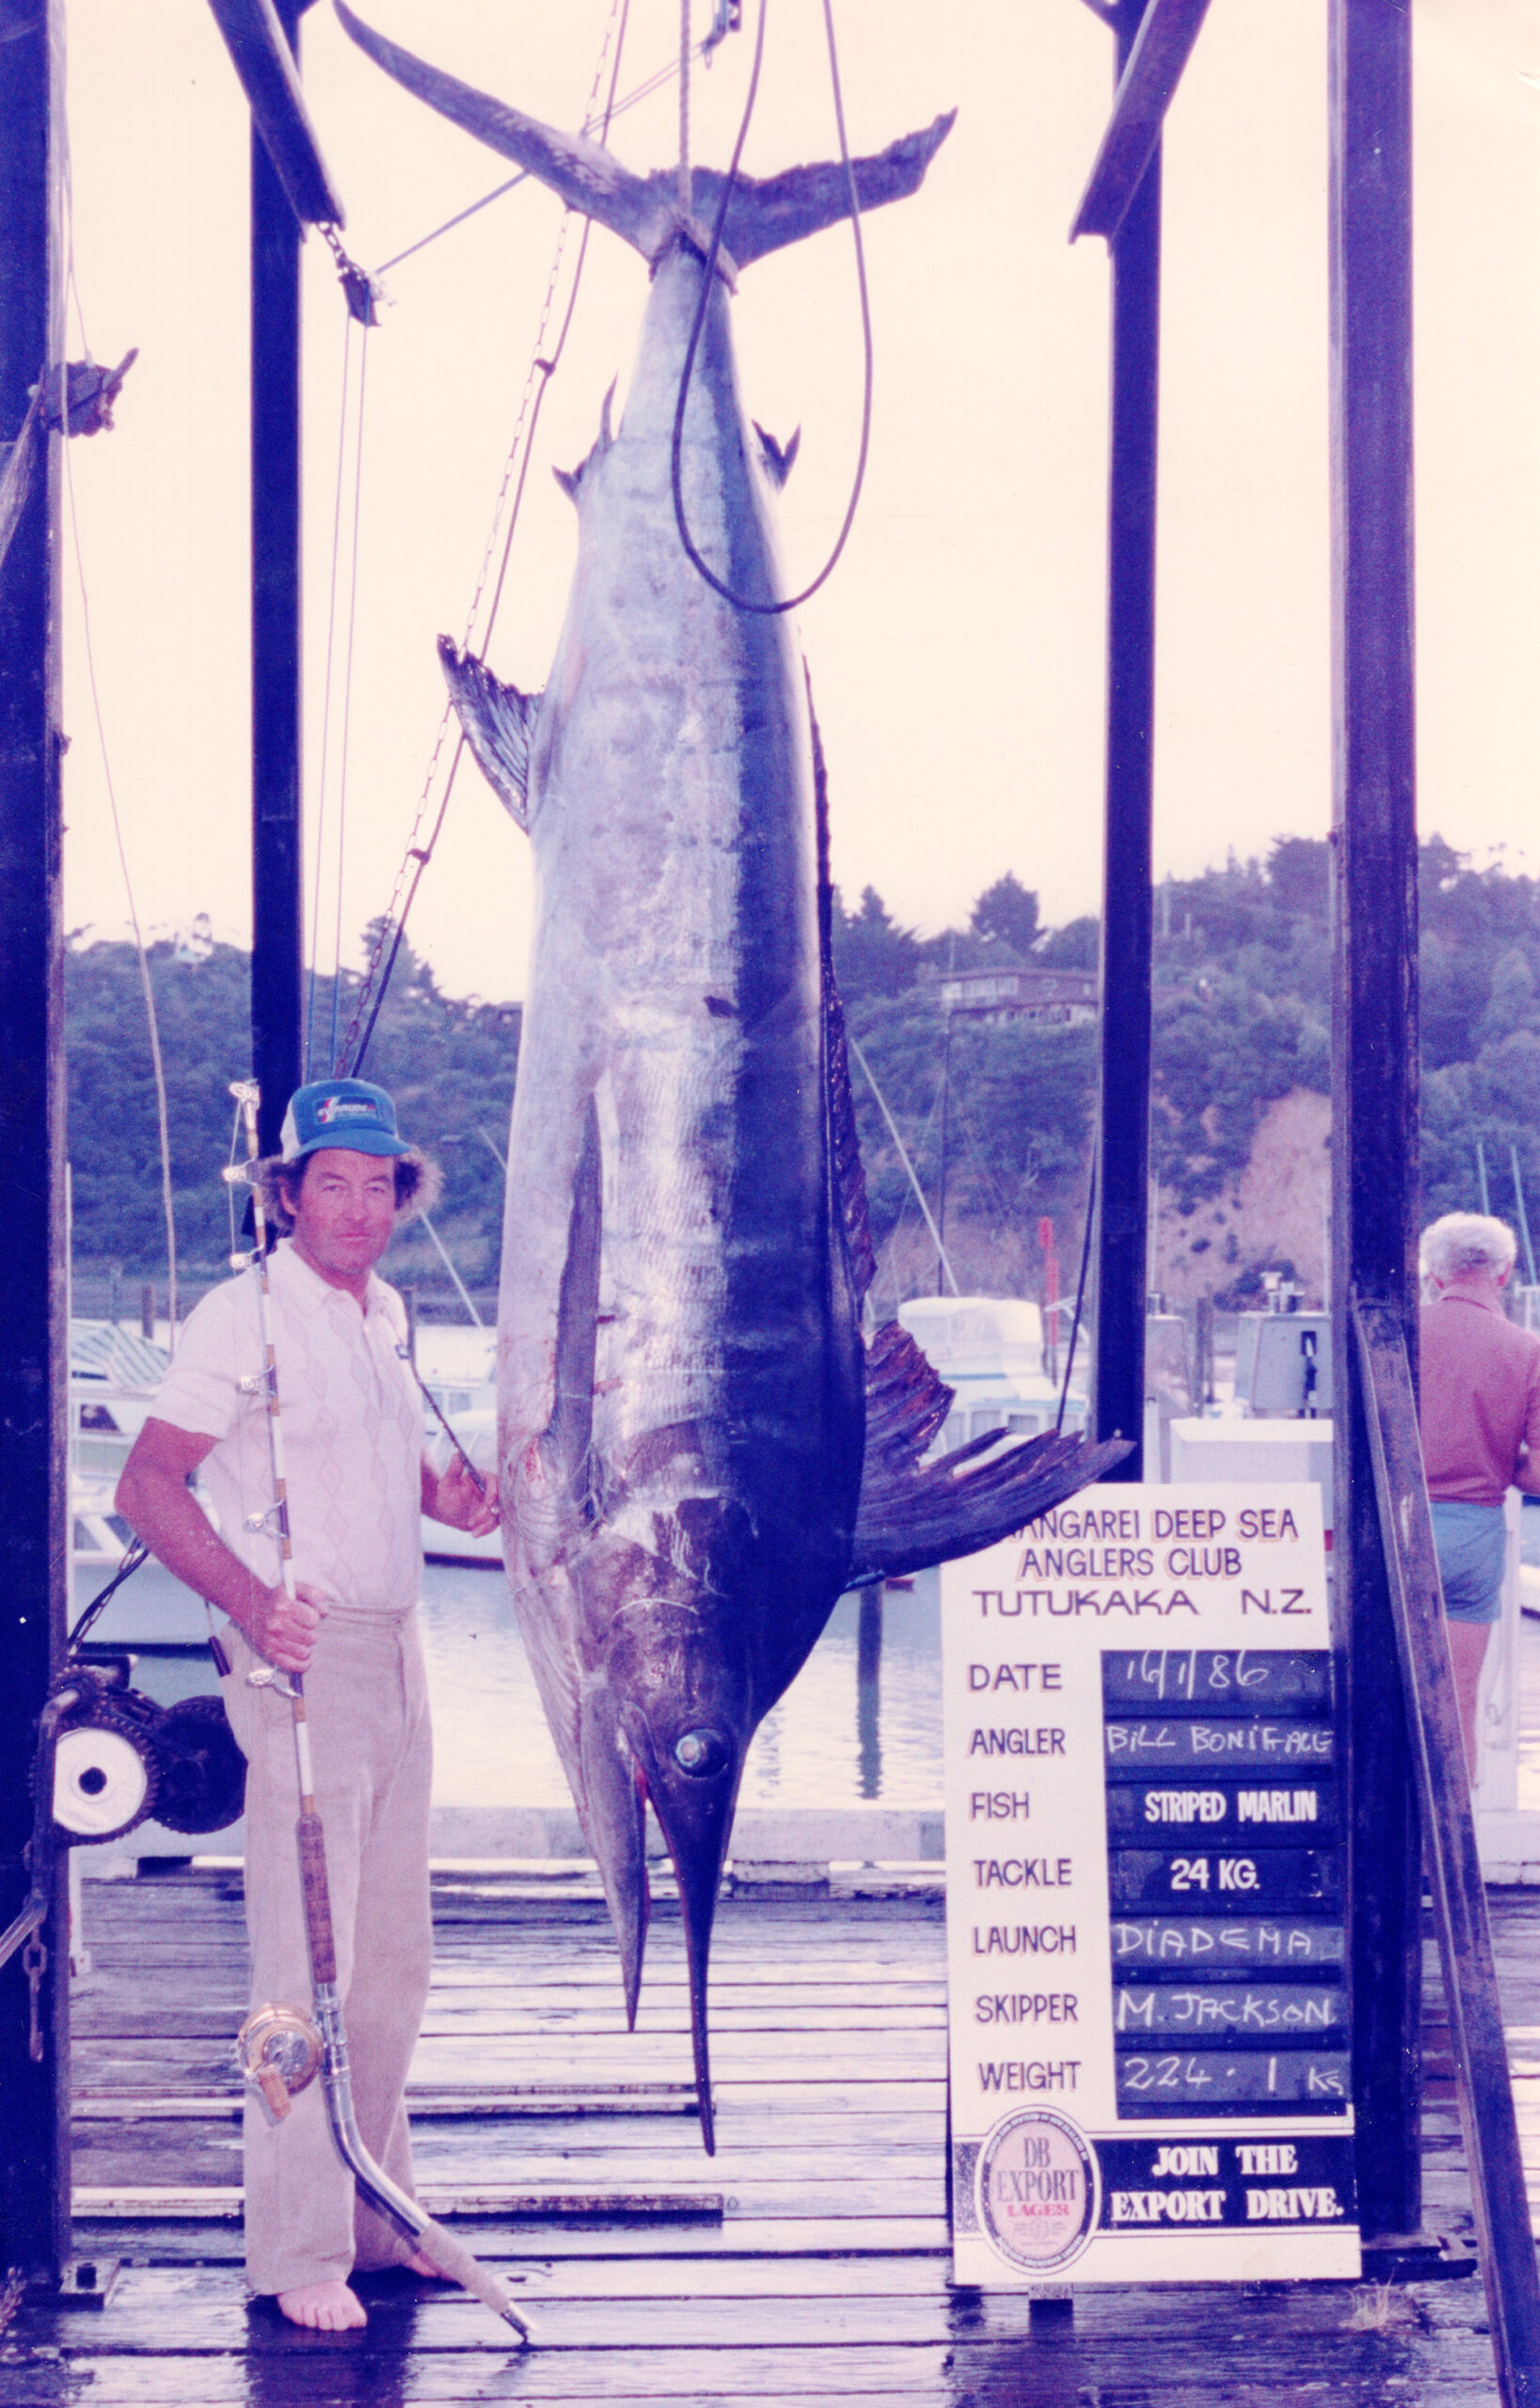 World Record Marlin